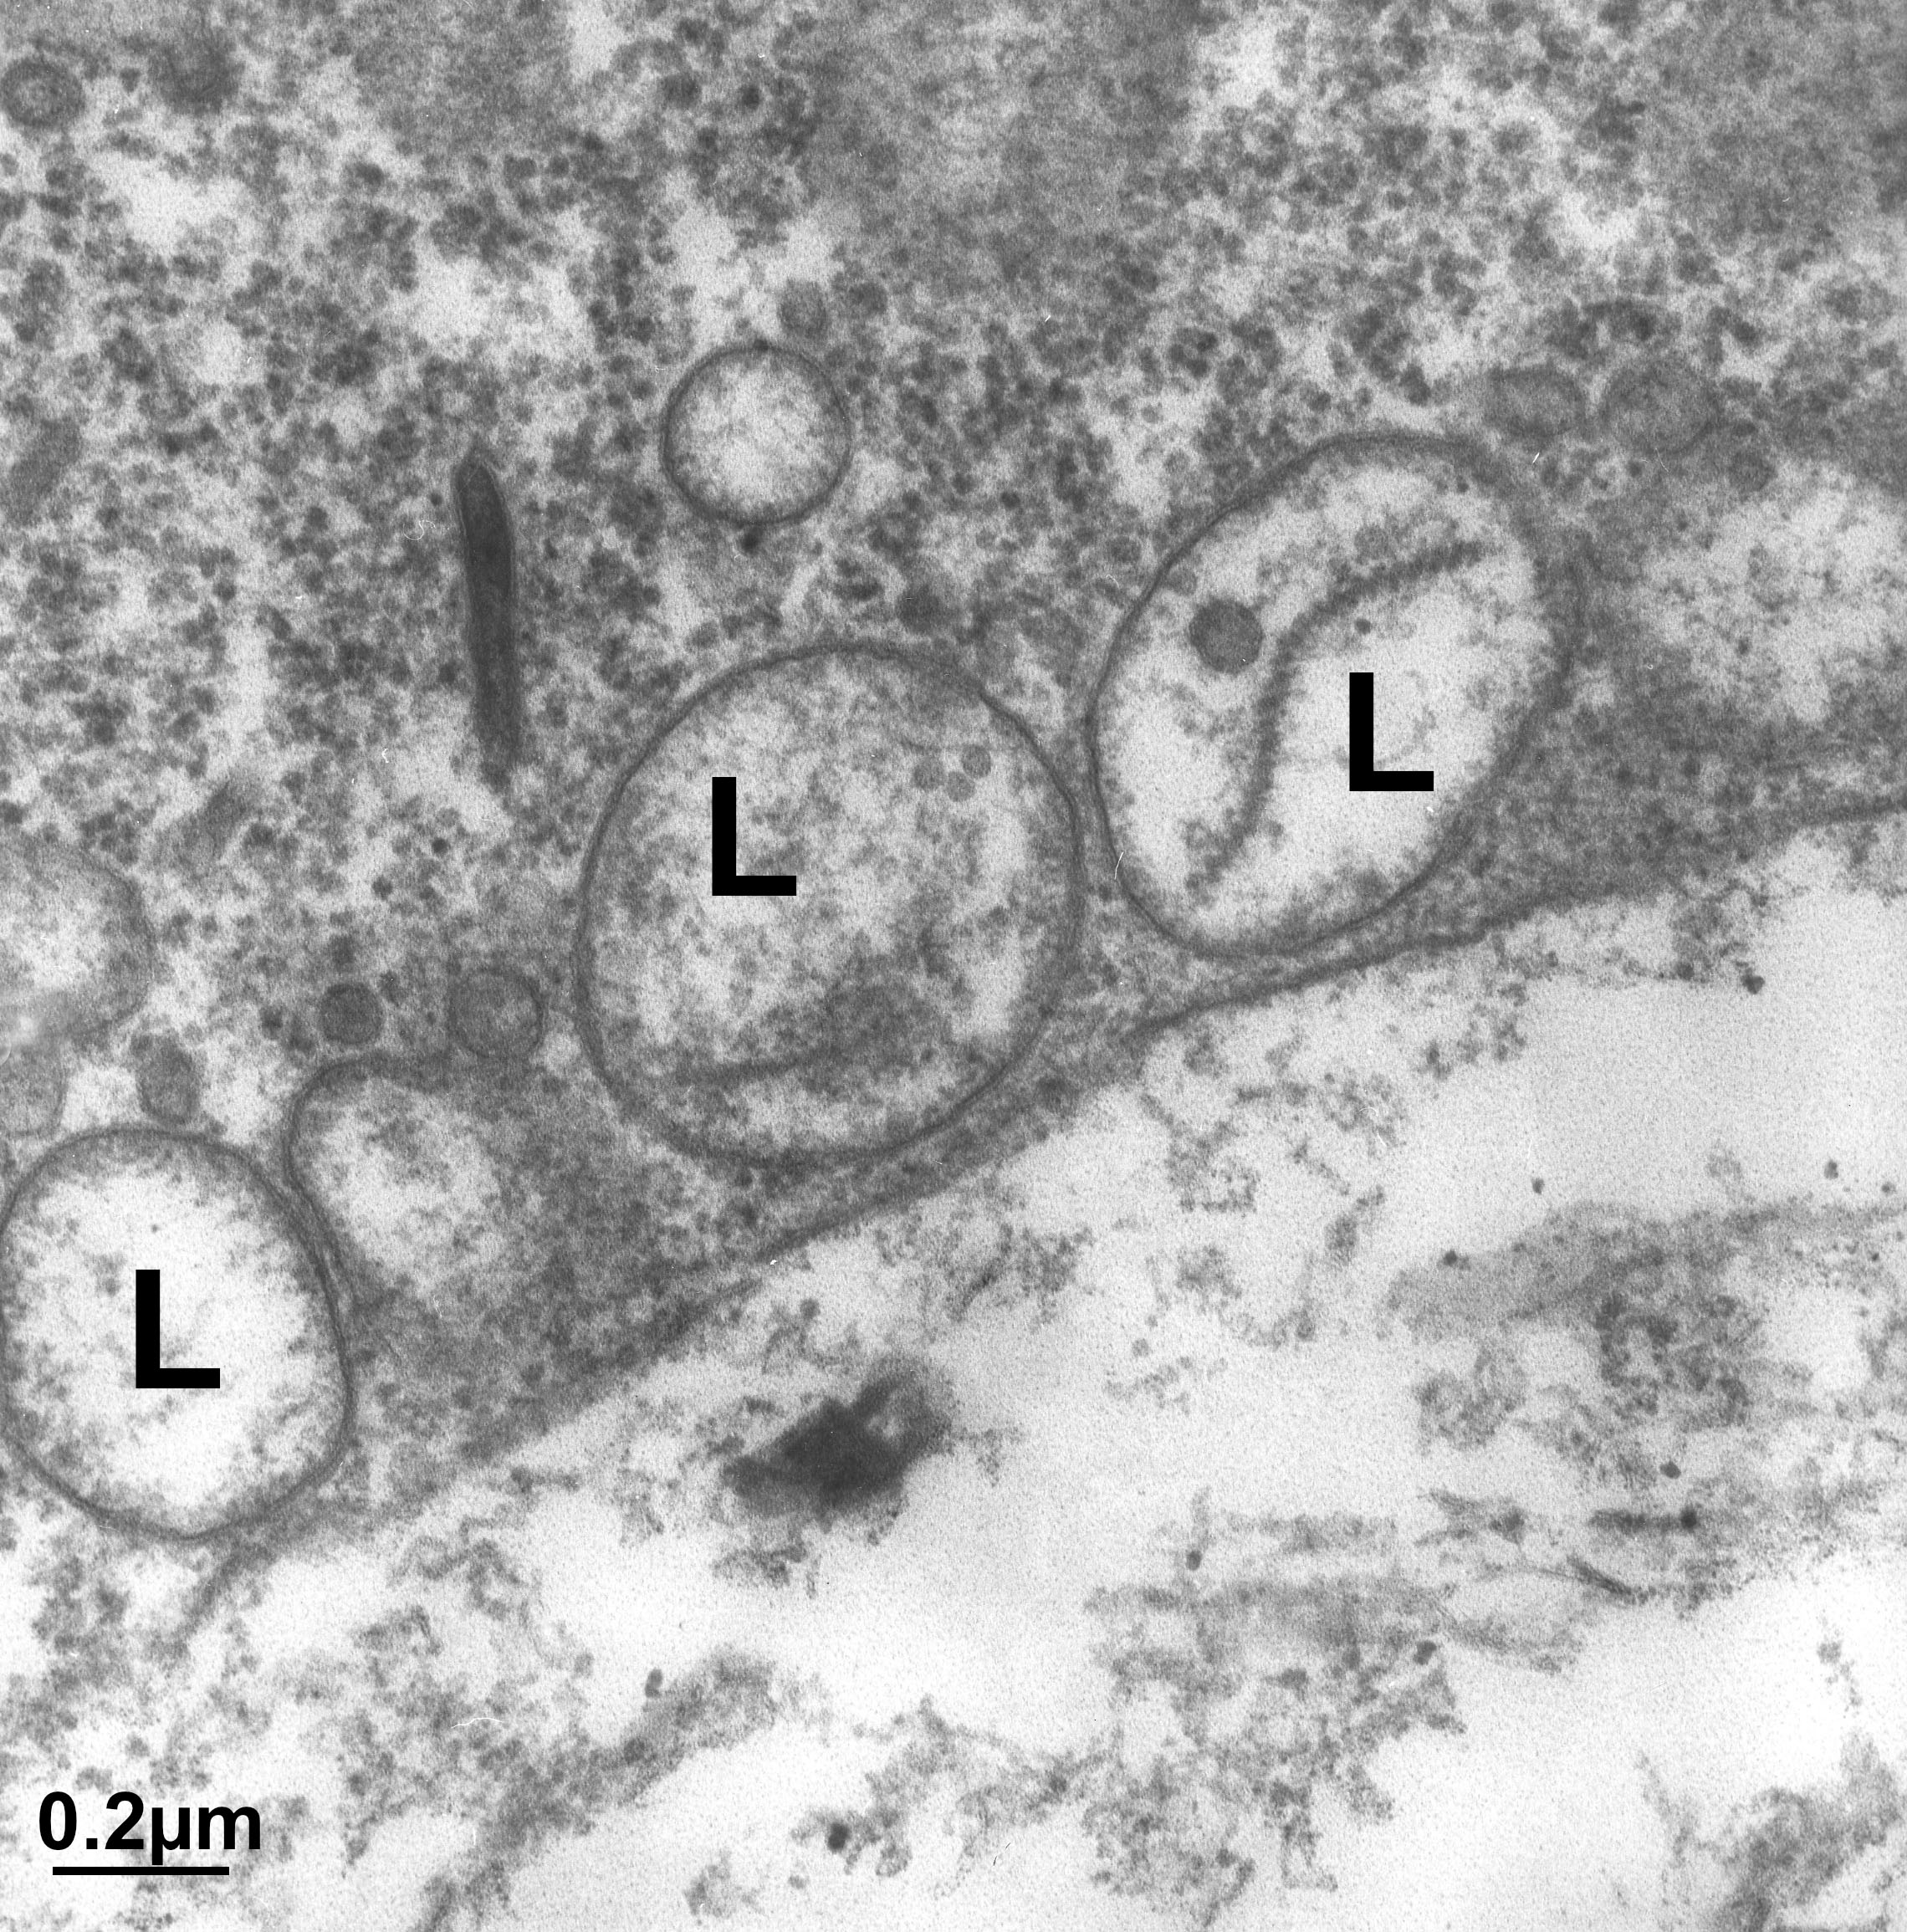 Three lysosomes (each labelled 'L')